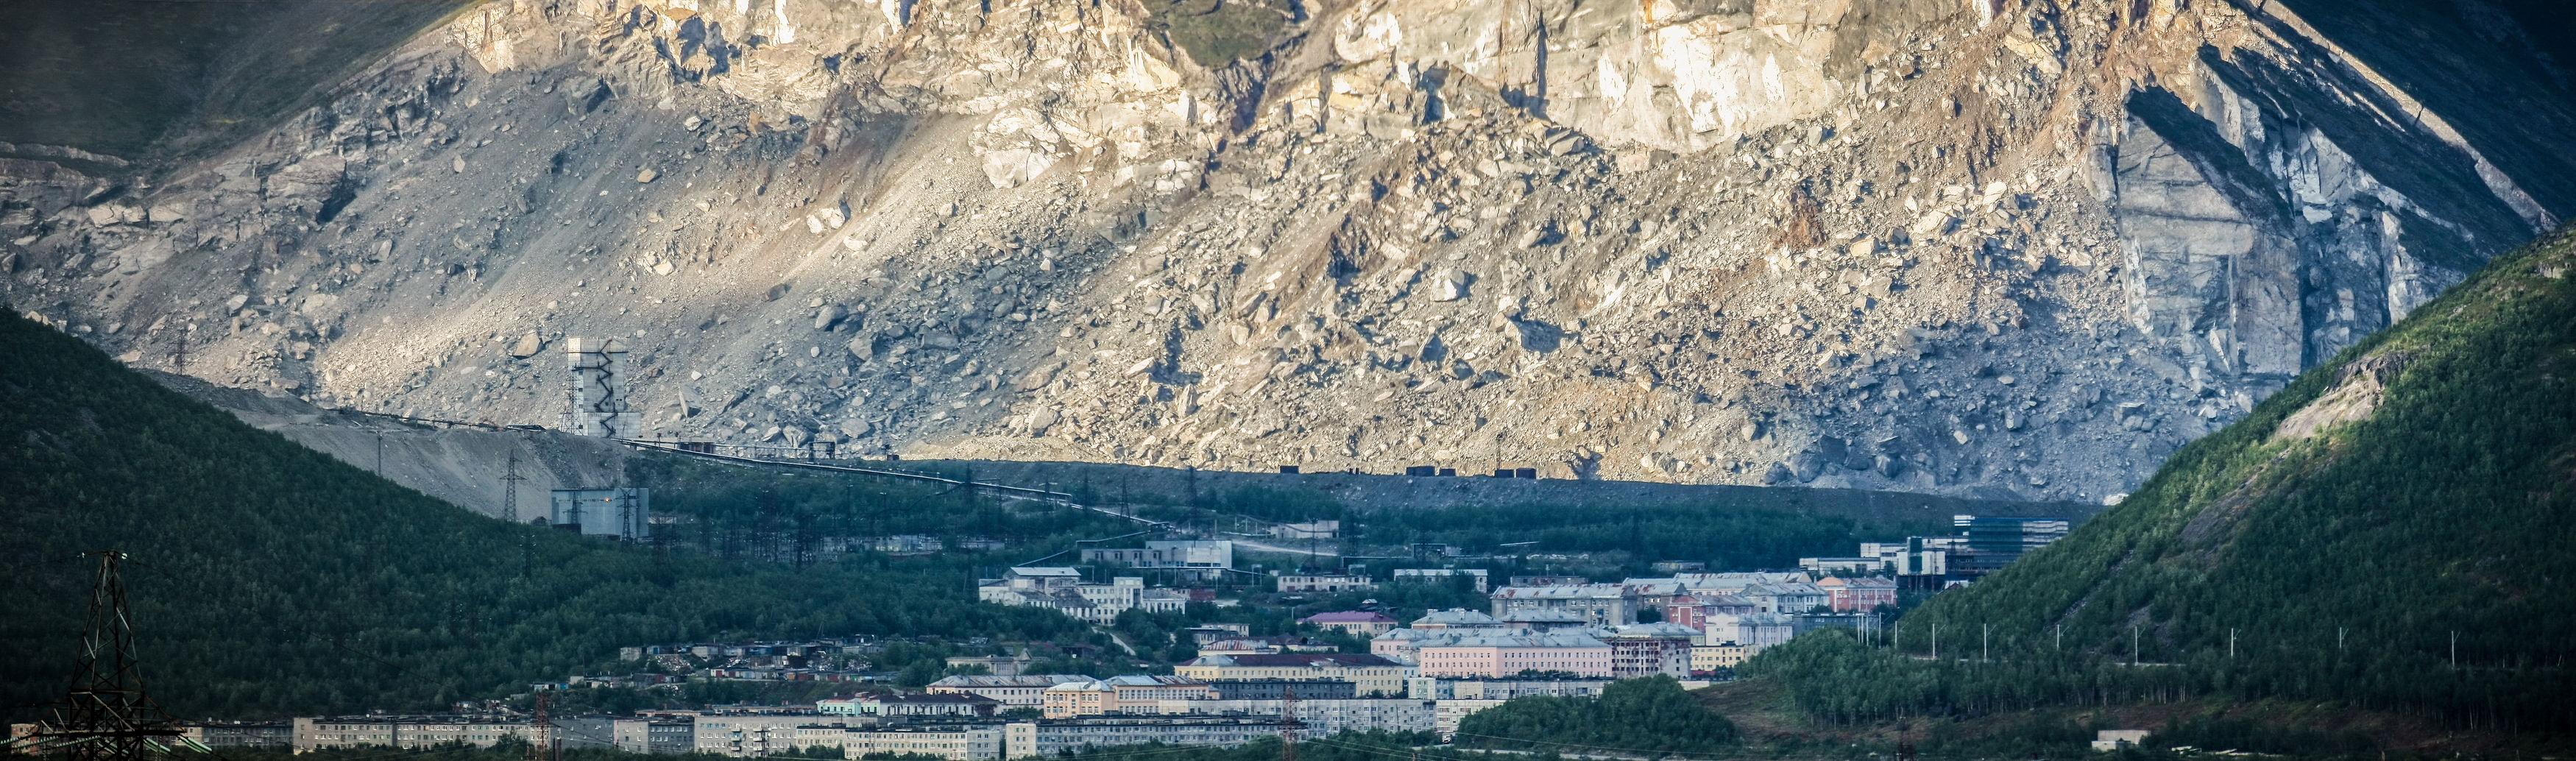 гора, горы, рудник, рудники, панорама, дома, Vladimir Kedrov